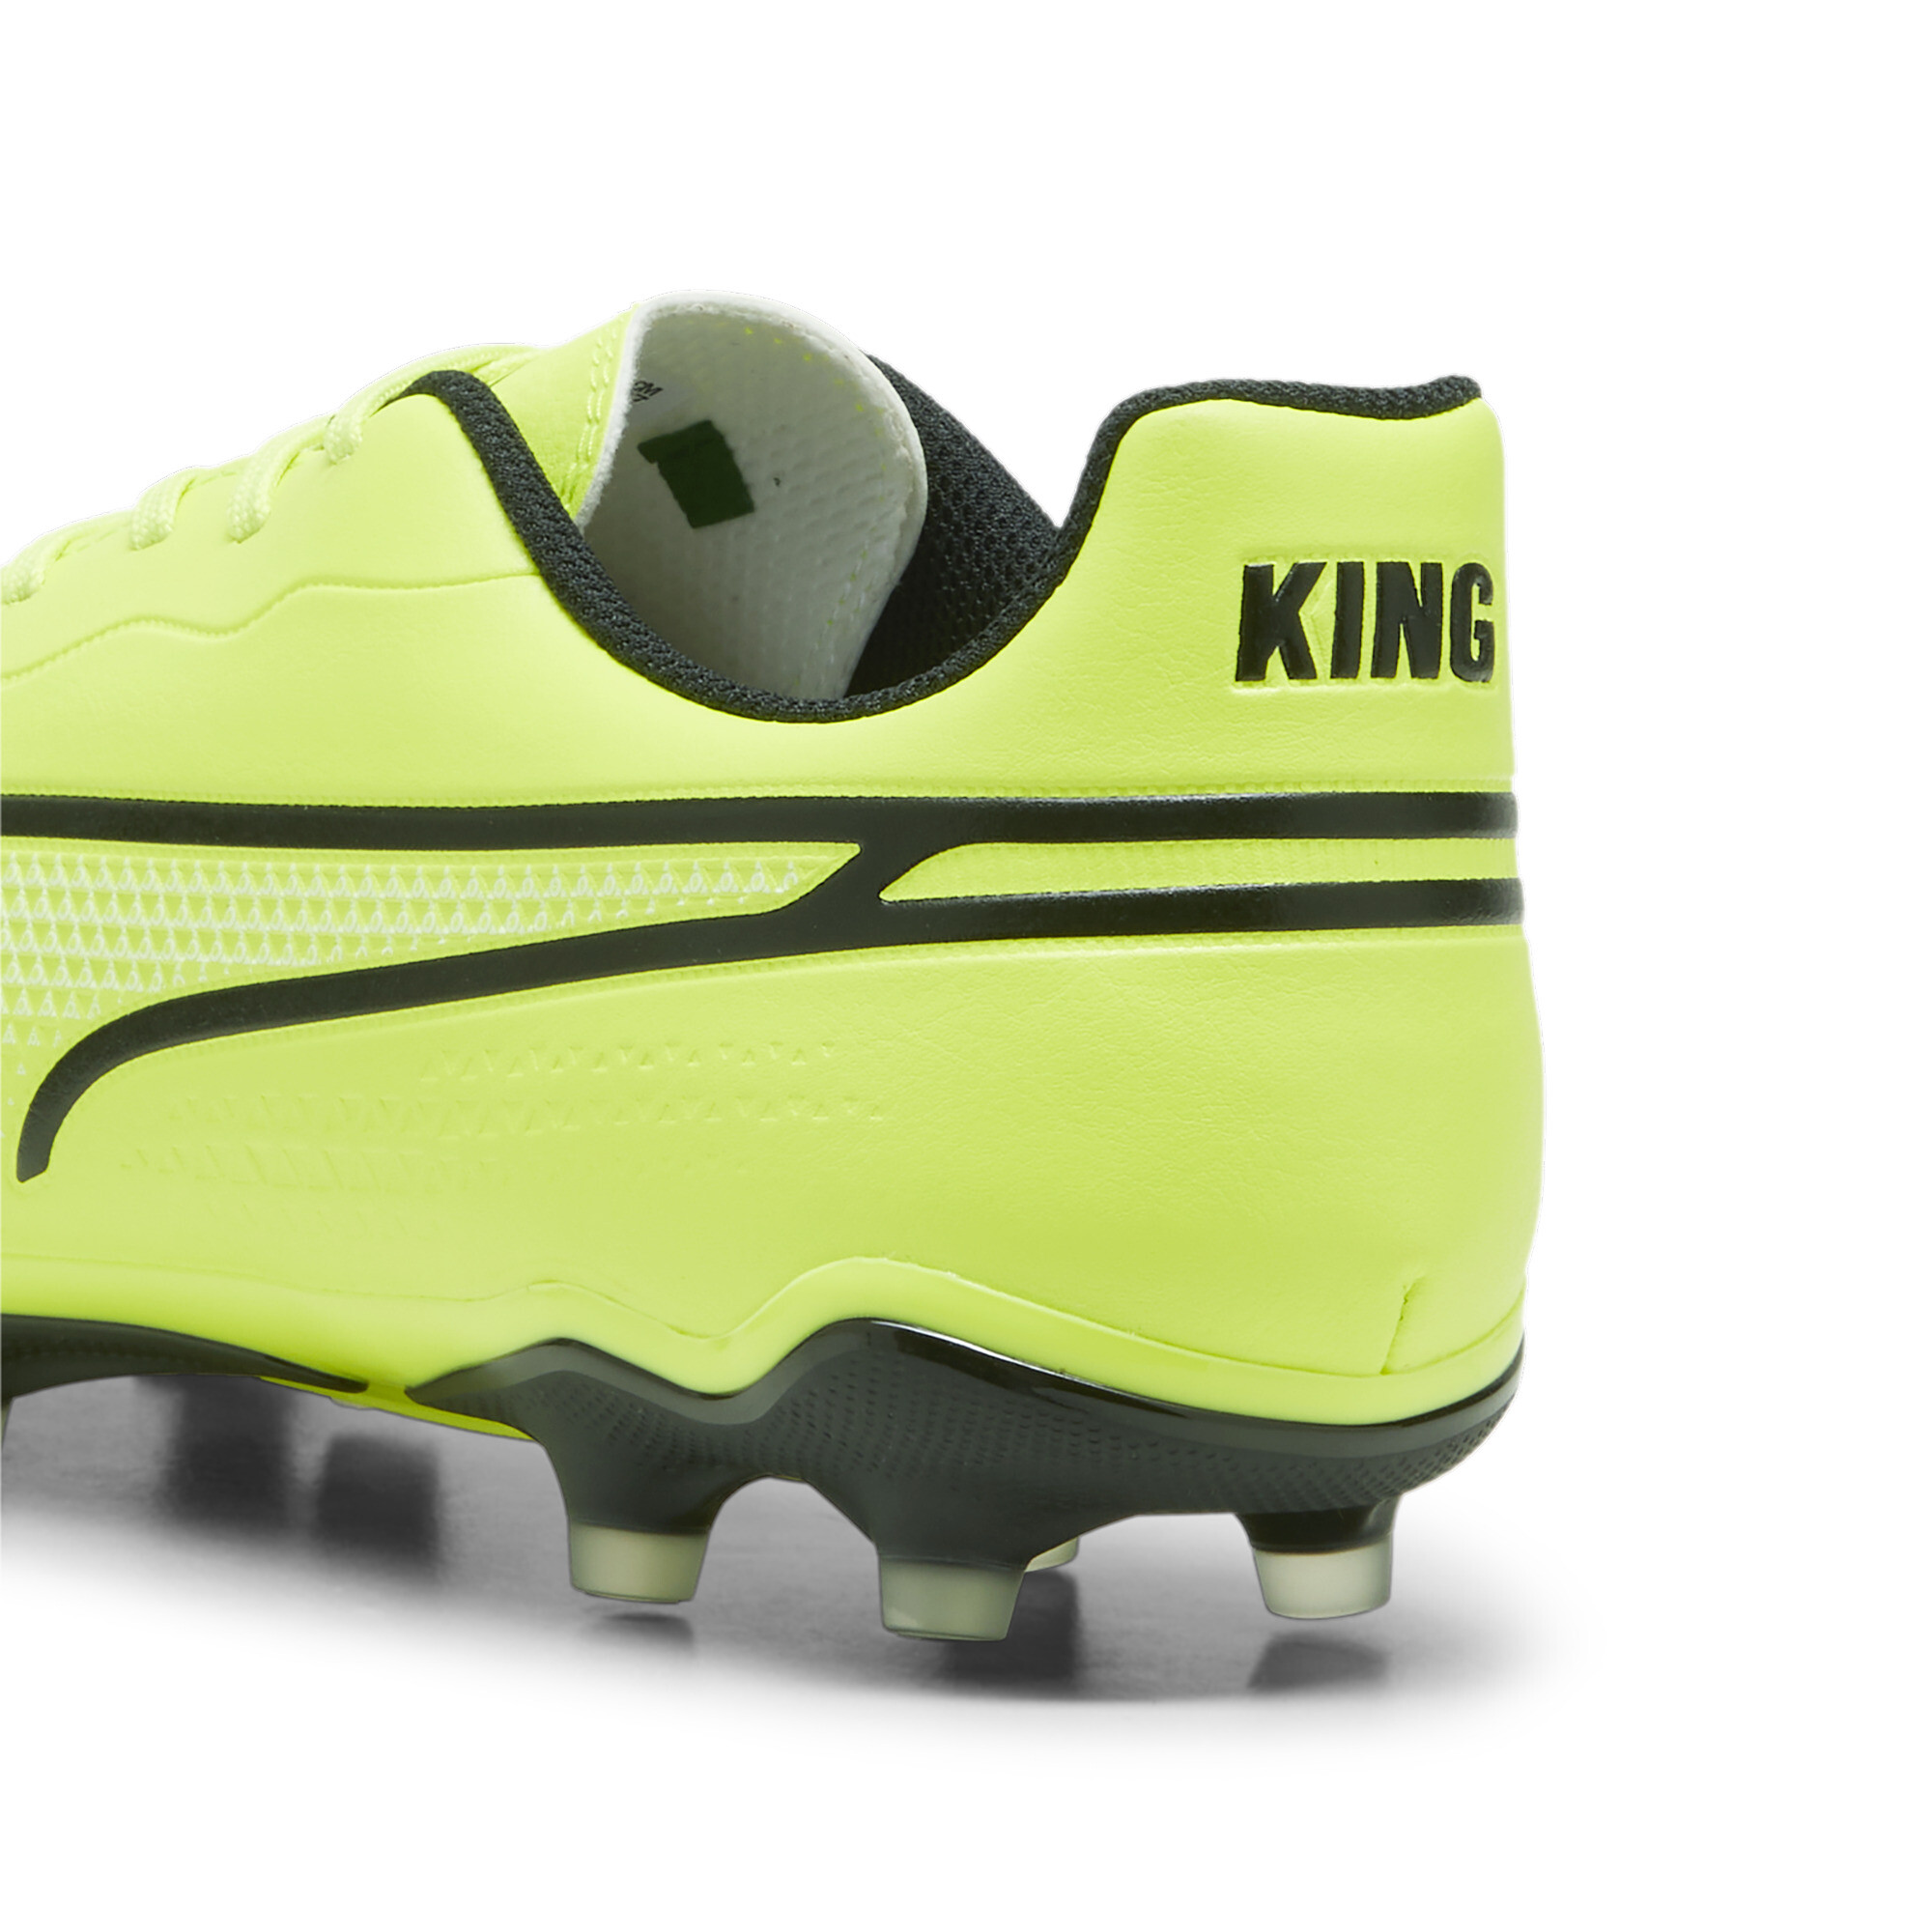 Men's PUMA KING MATCH FG/AG Football Boots In Green, Size EU 41